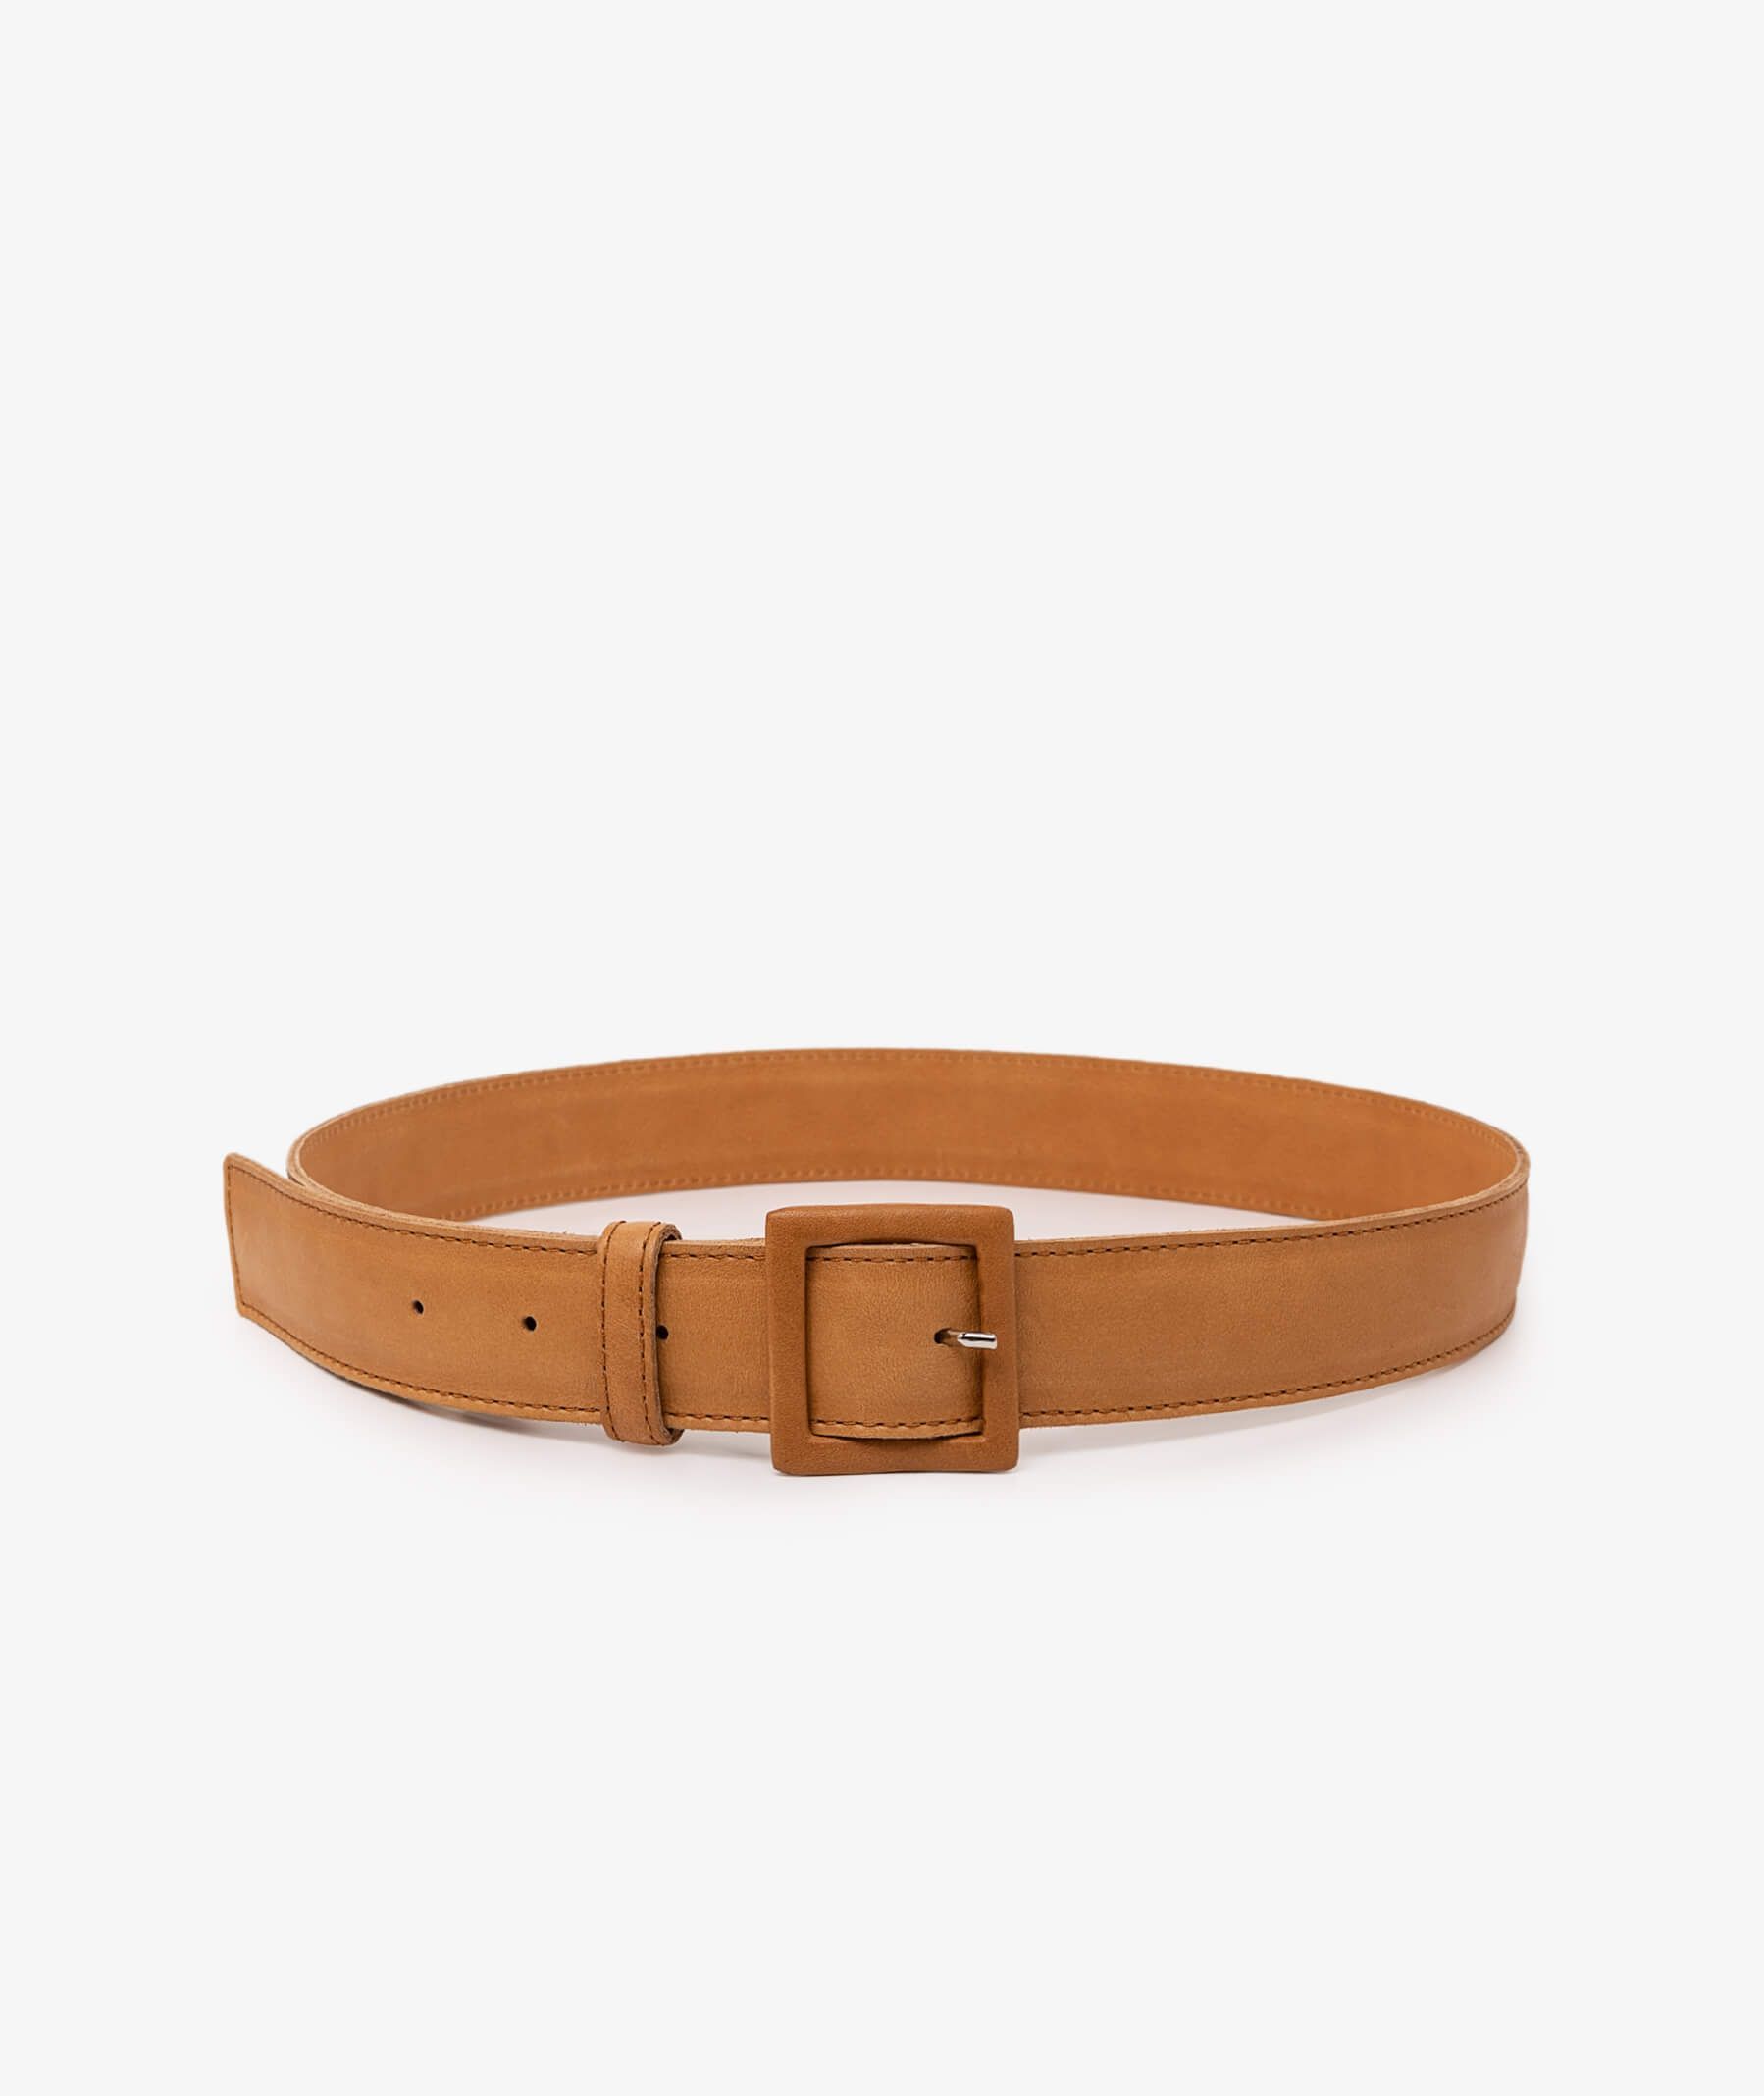 Product Image for Marcela Leather Belt, Brown